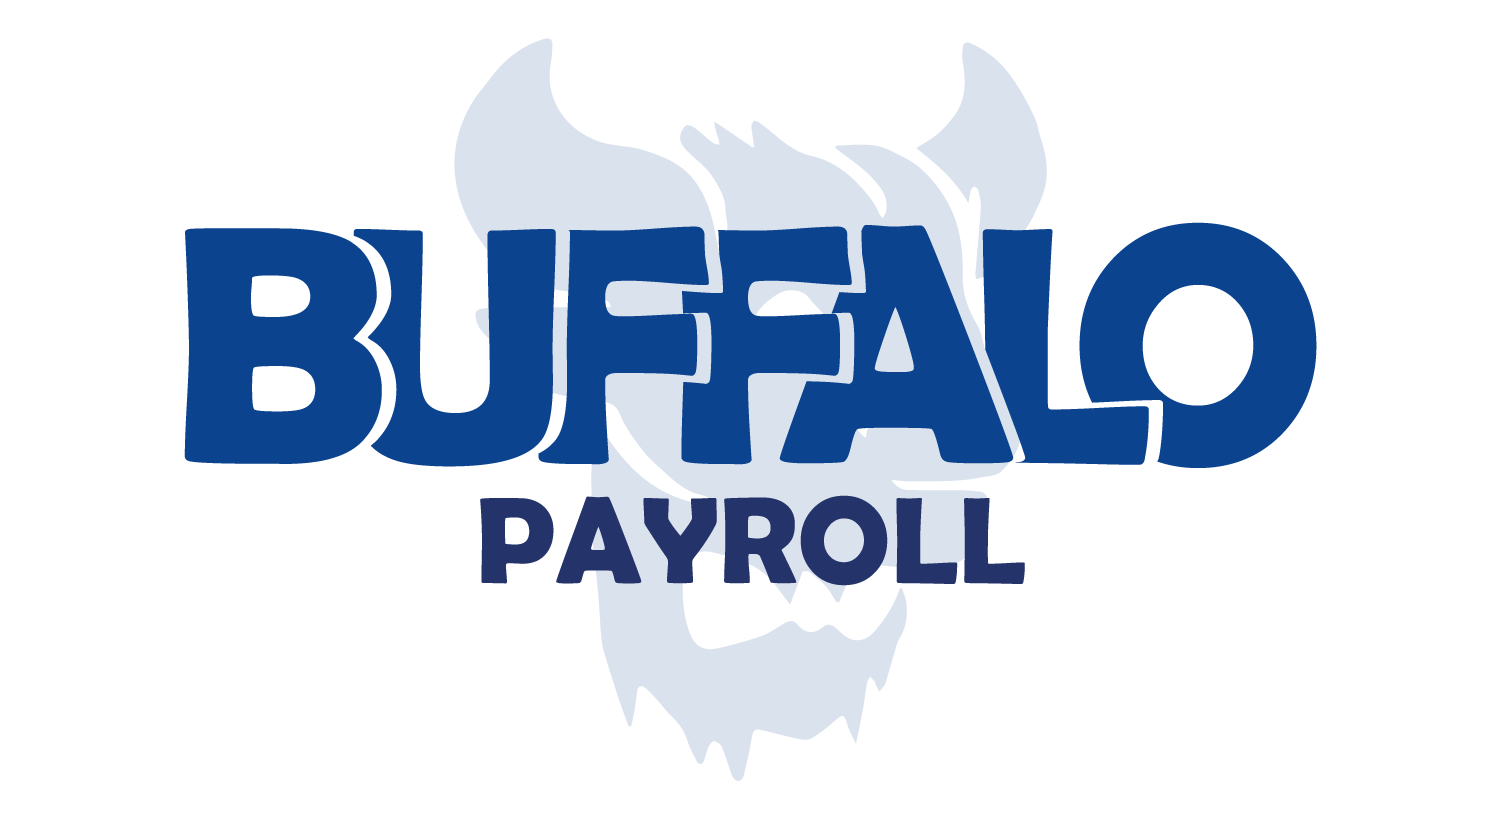 Buffalo Payroll